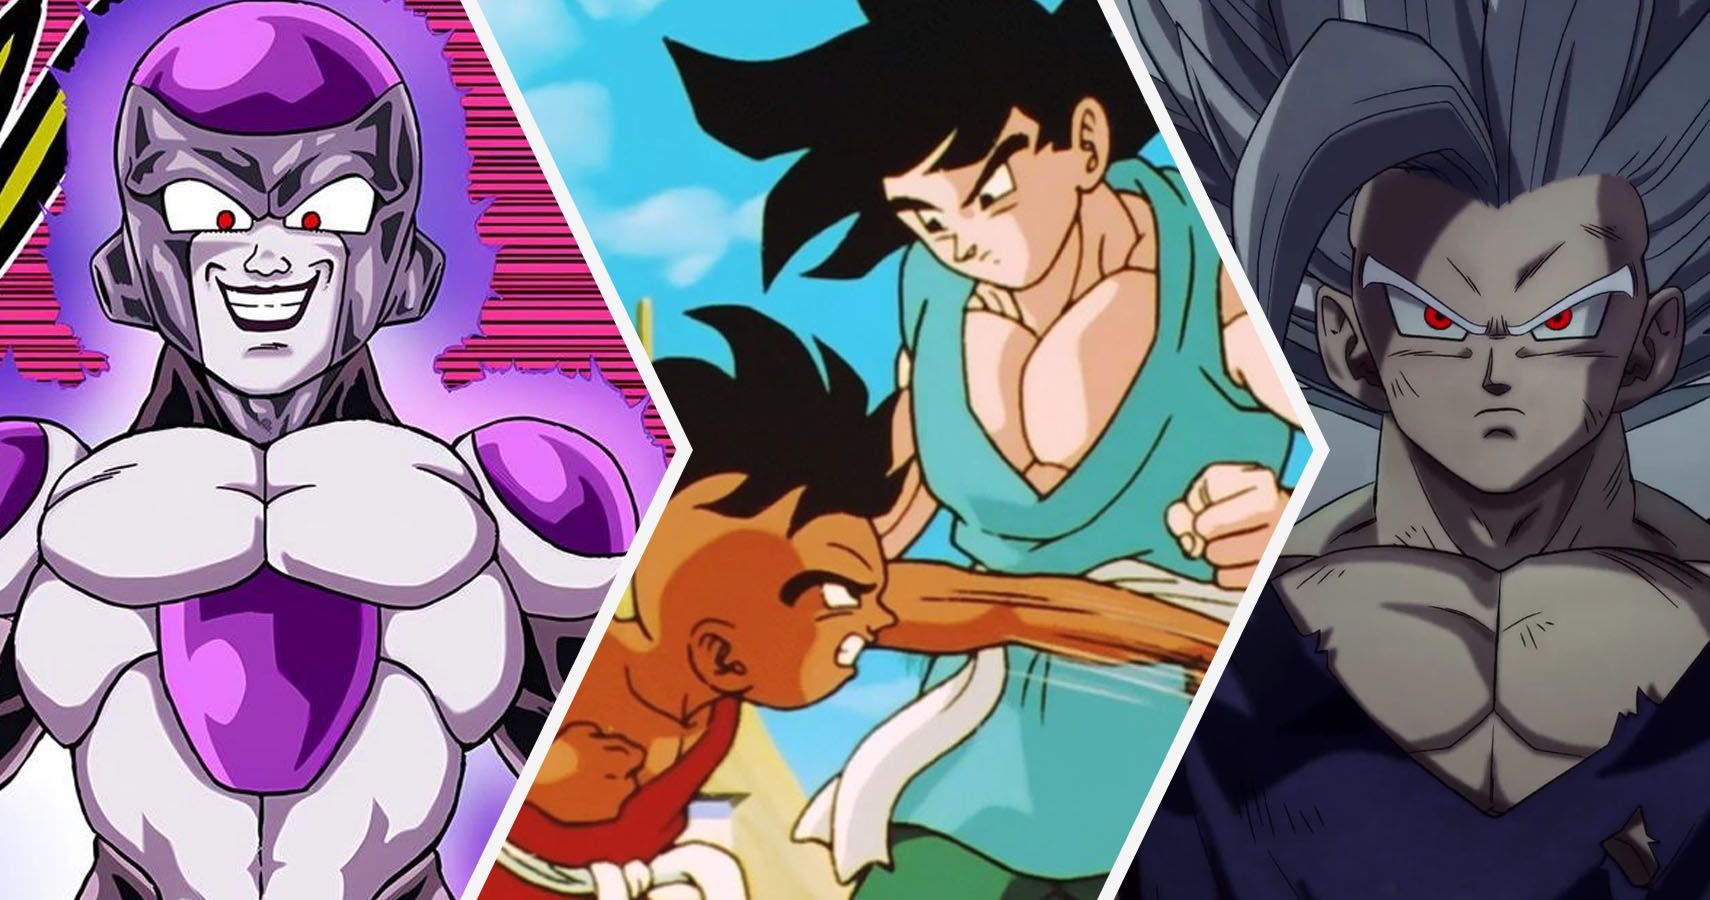 Black Frieza, Uub vs Goku, and Gohan Beast